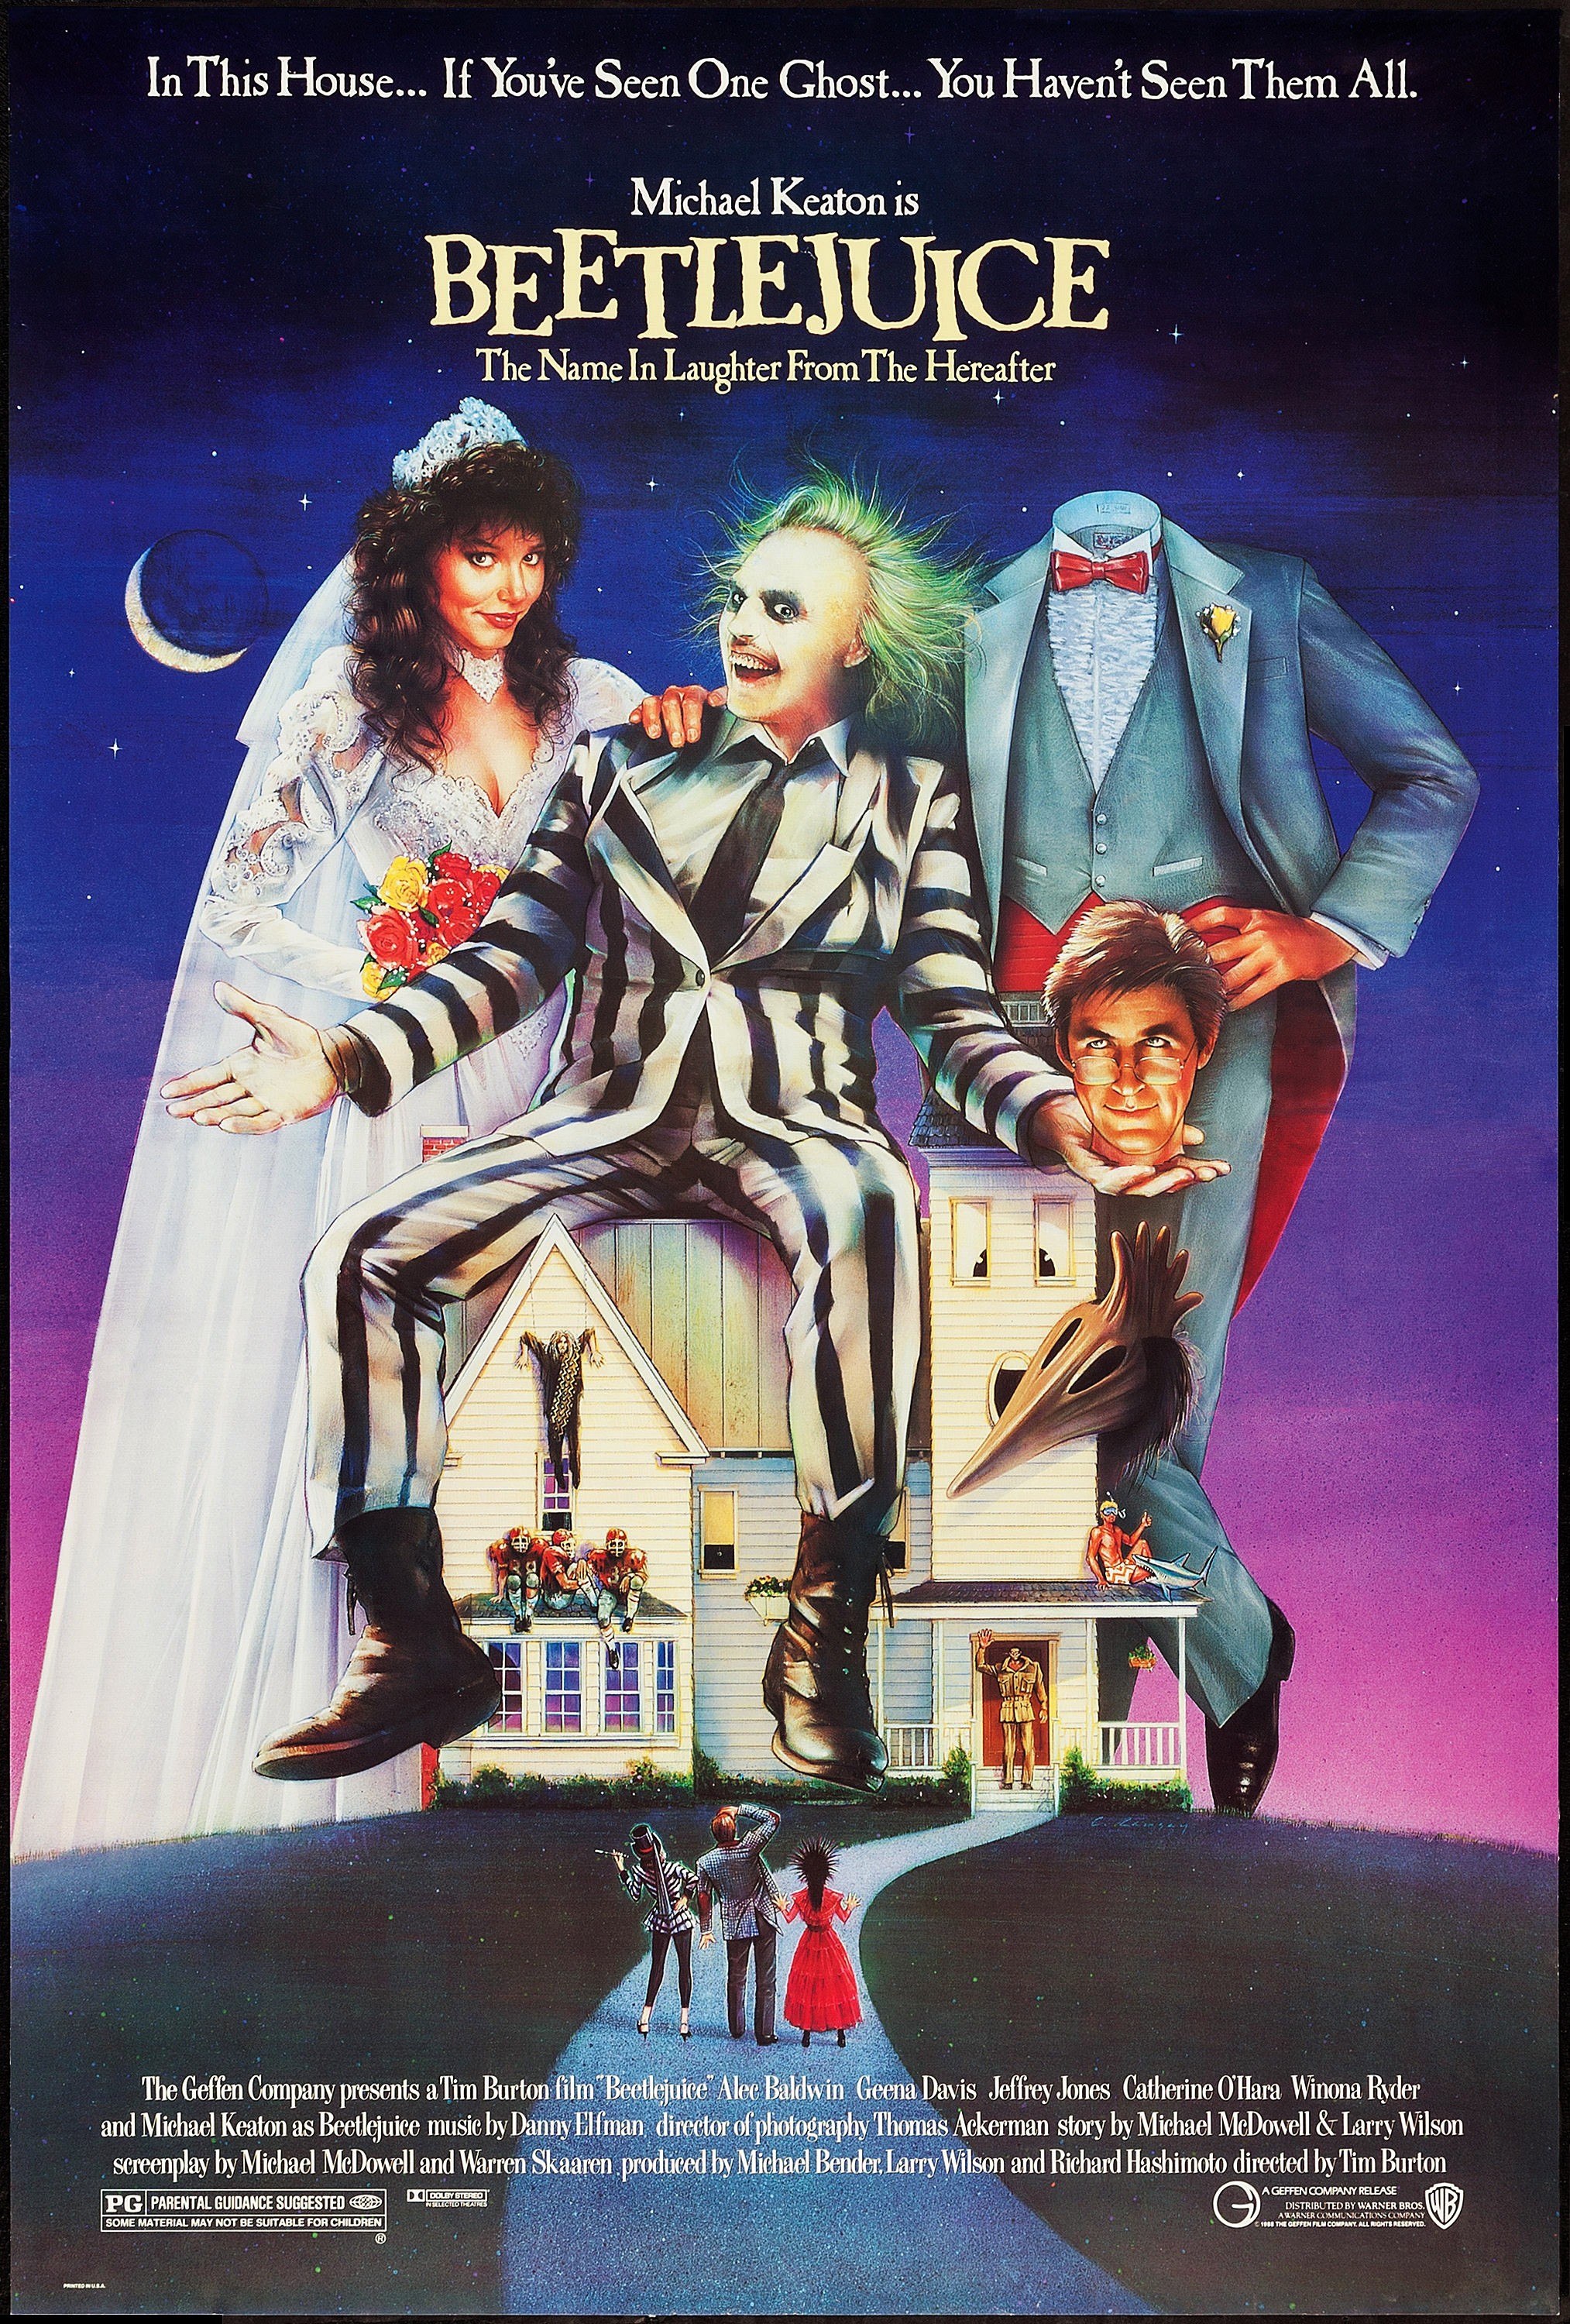 REVIEW  Tim Burton brings family-friendly macabre fun to